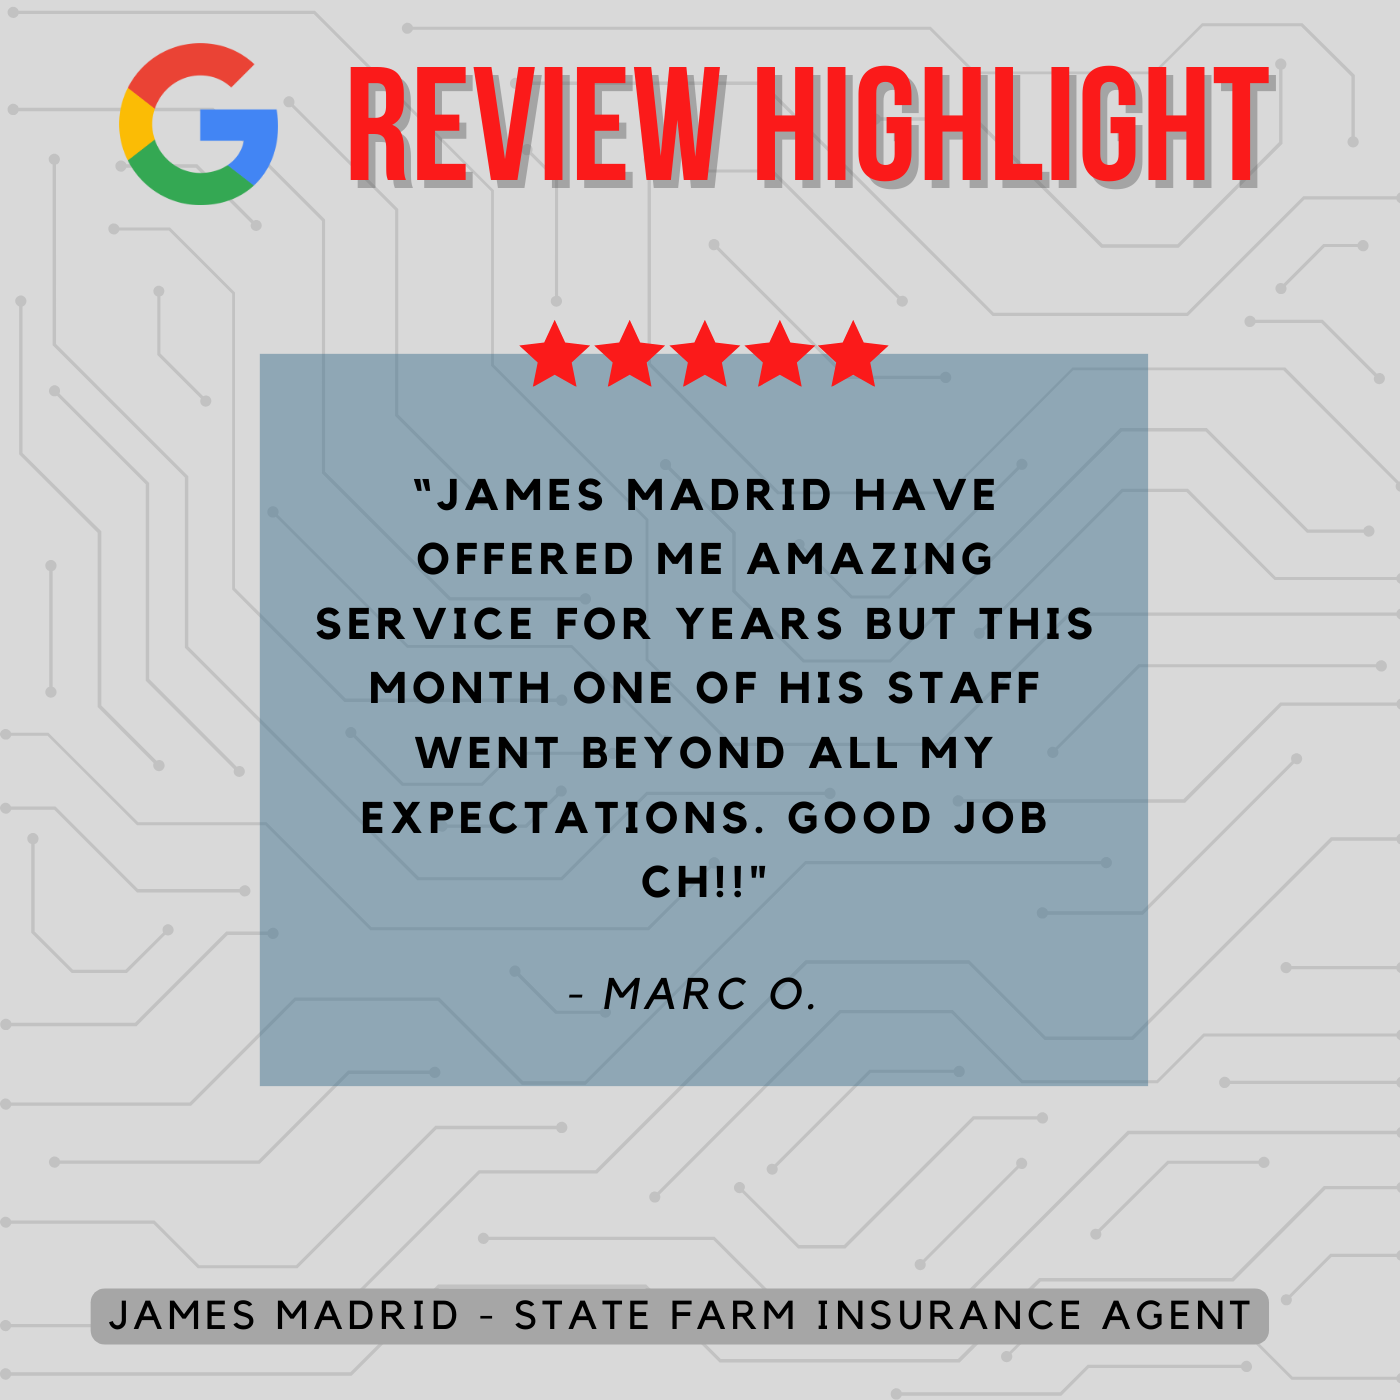 James Madrid - State Farm Insurance Agent James Madrid - State Farm Insurance Agent Las Vegas (702)998-8700